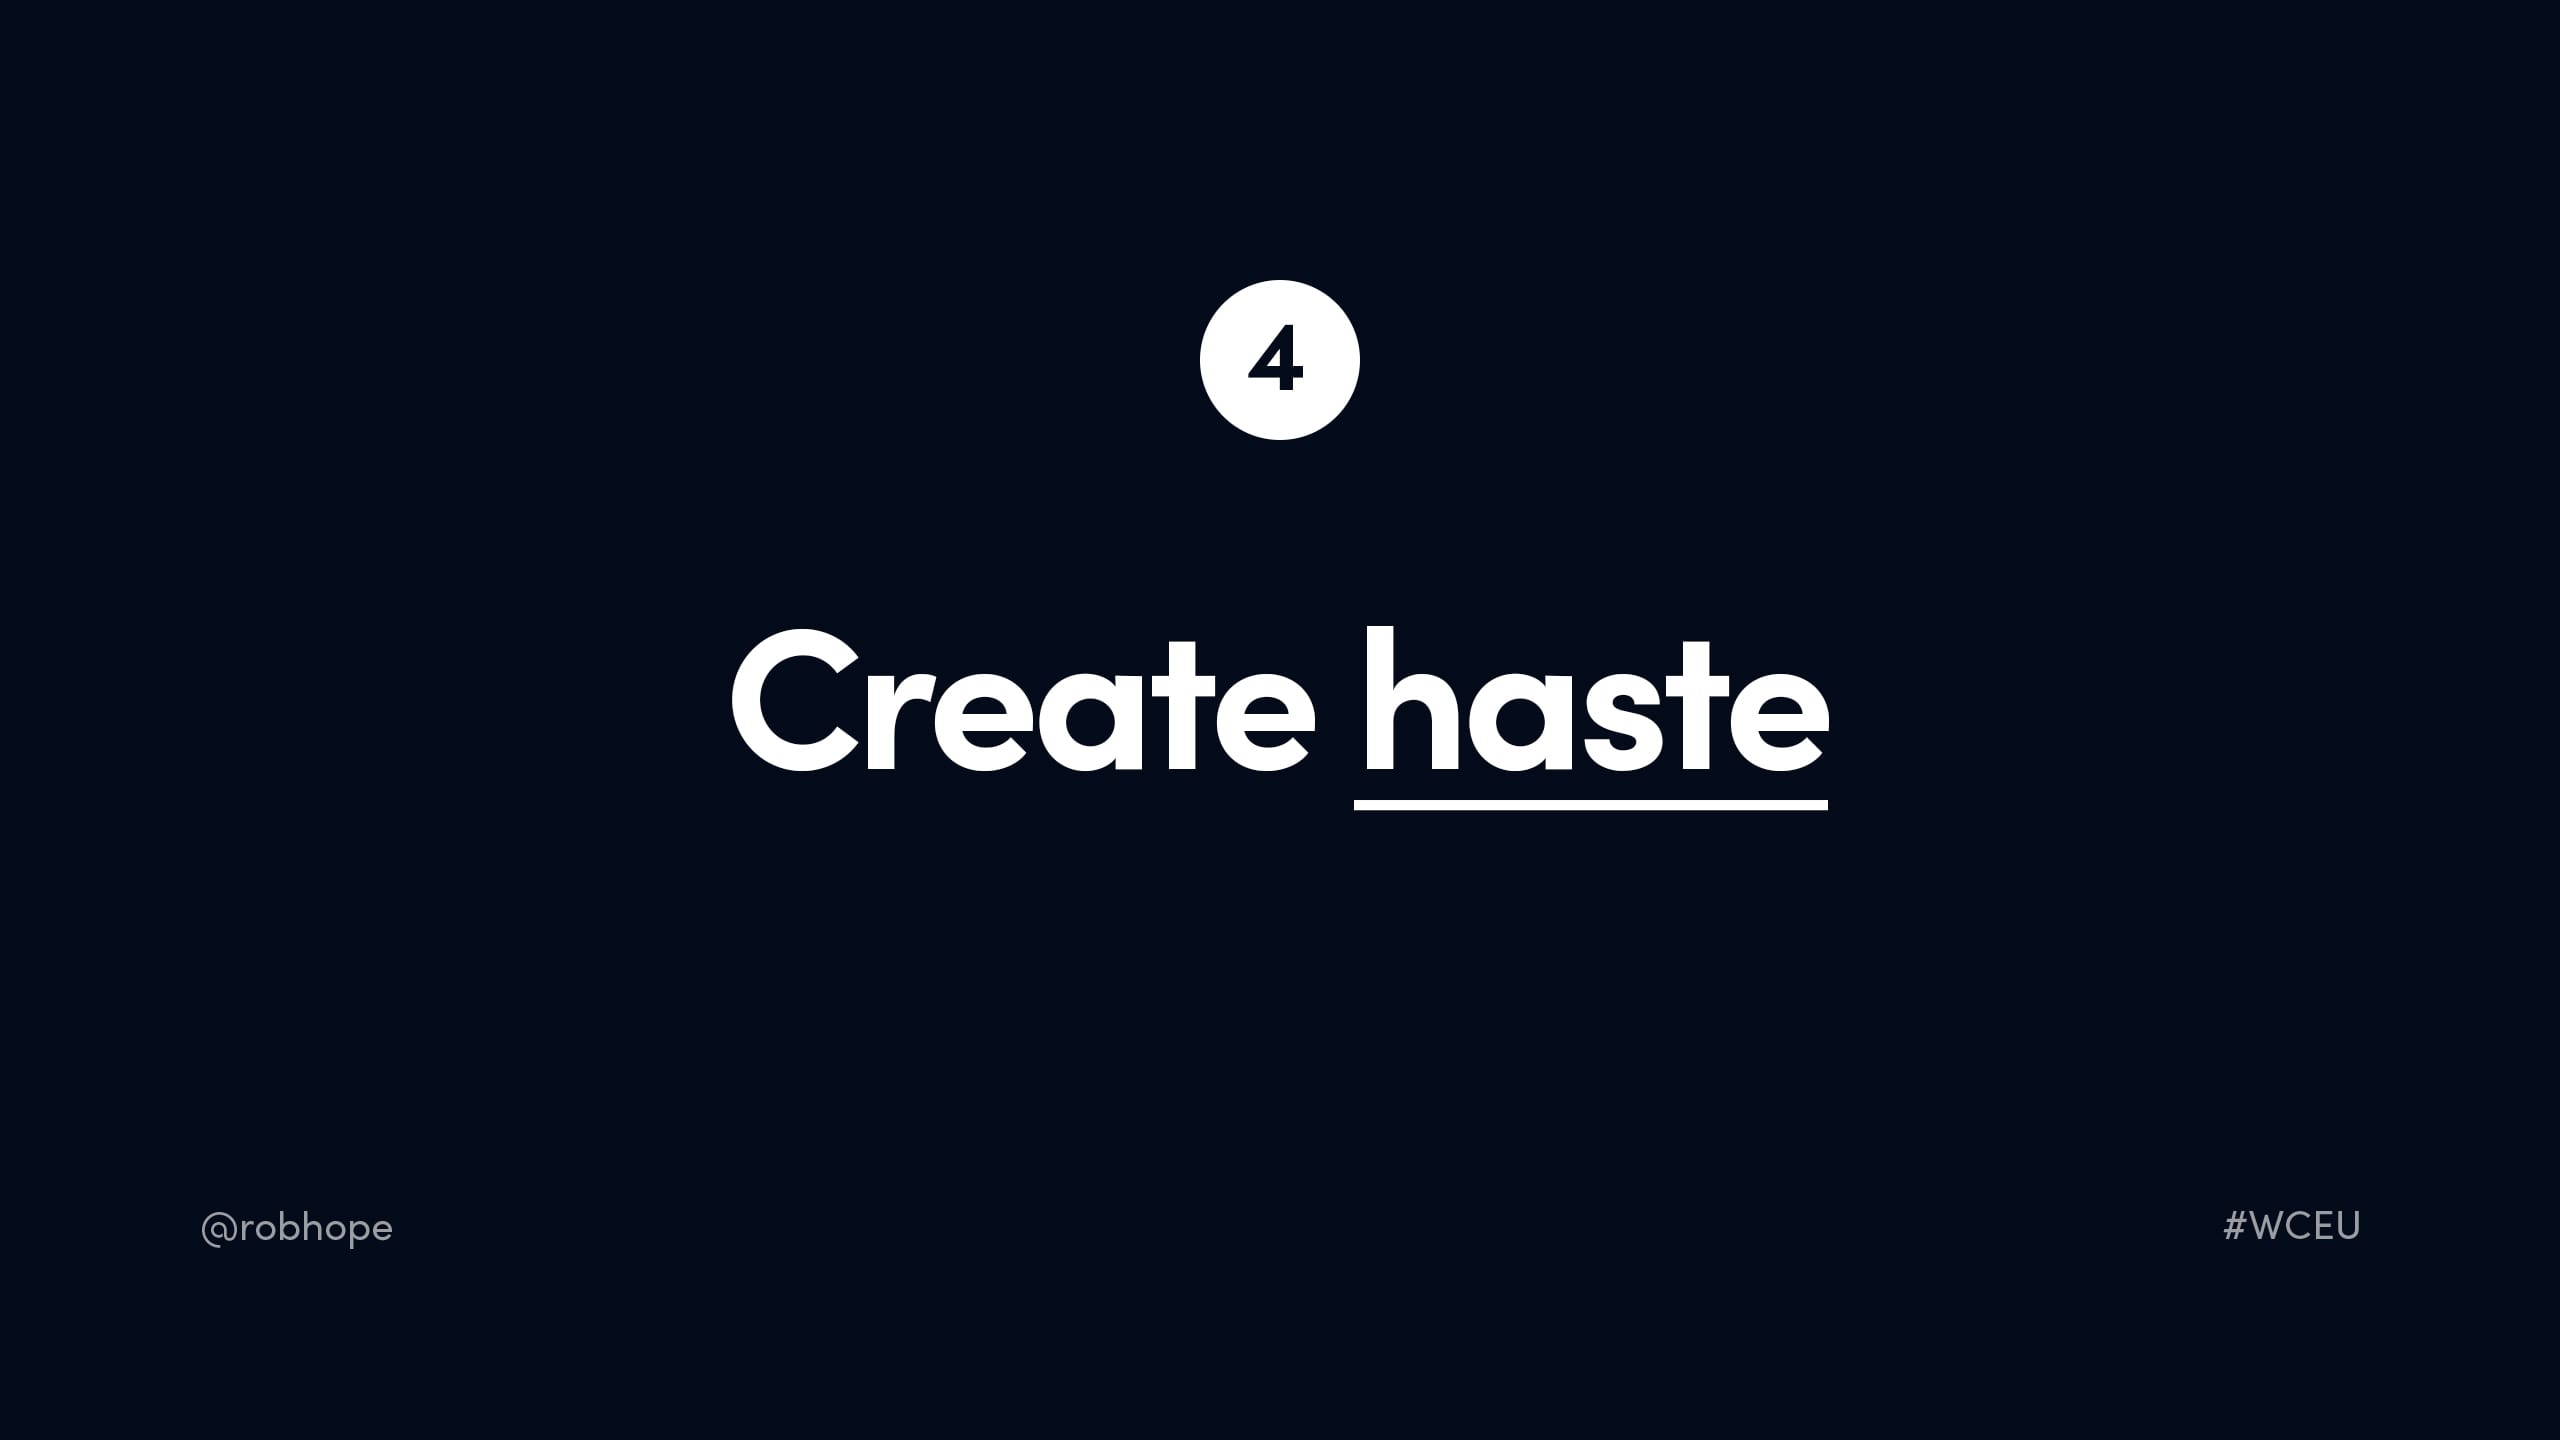 Create haste